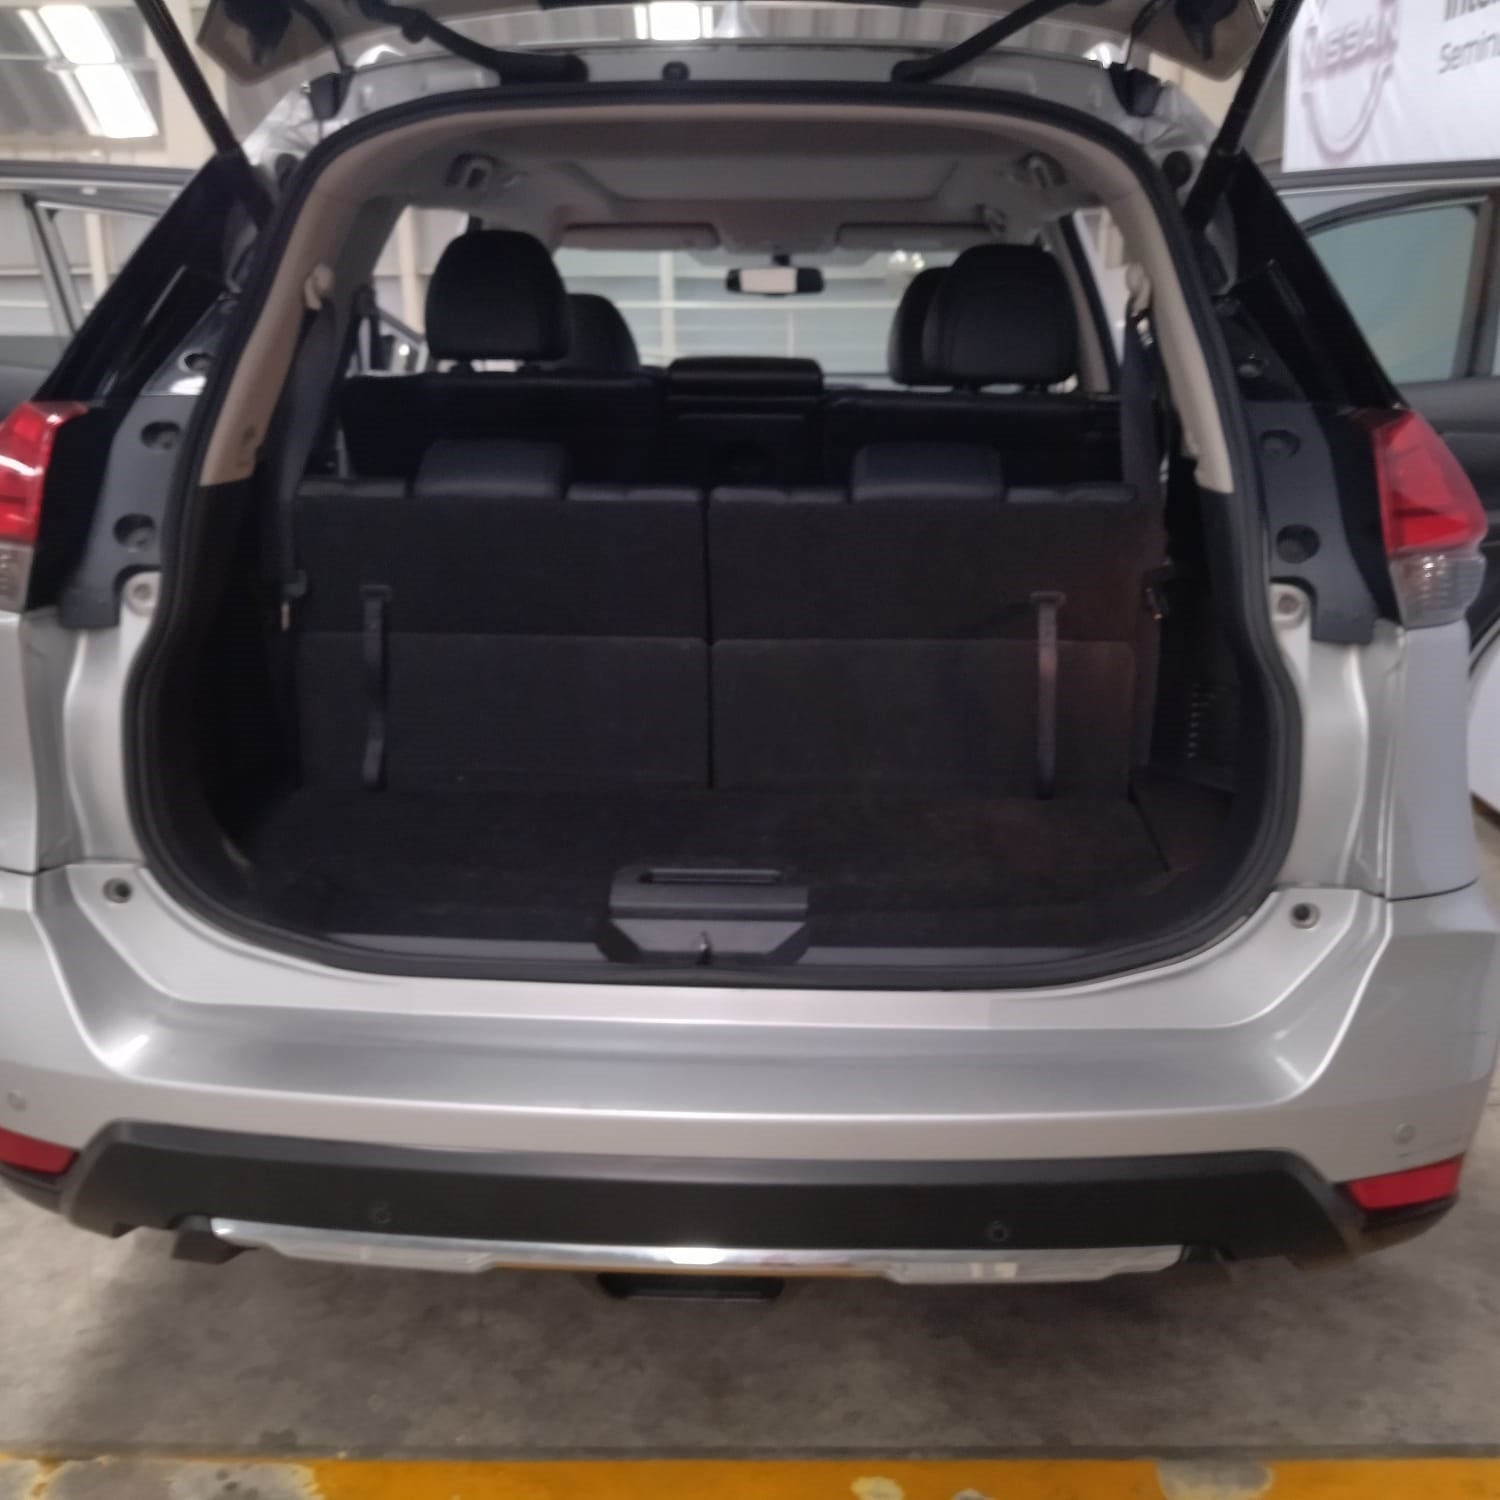 2019 Nissan X-TRAIL 5 PTS EXCLUSIVE CVT PIEL CD QC GPS 7 PAS RA-18 4X4